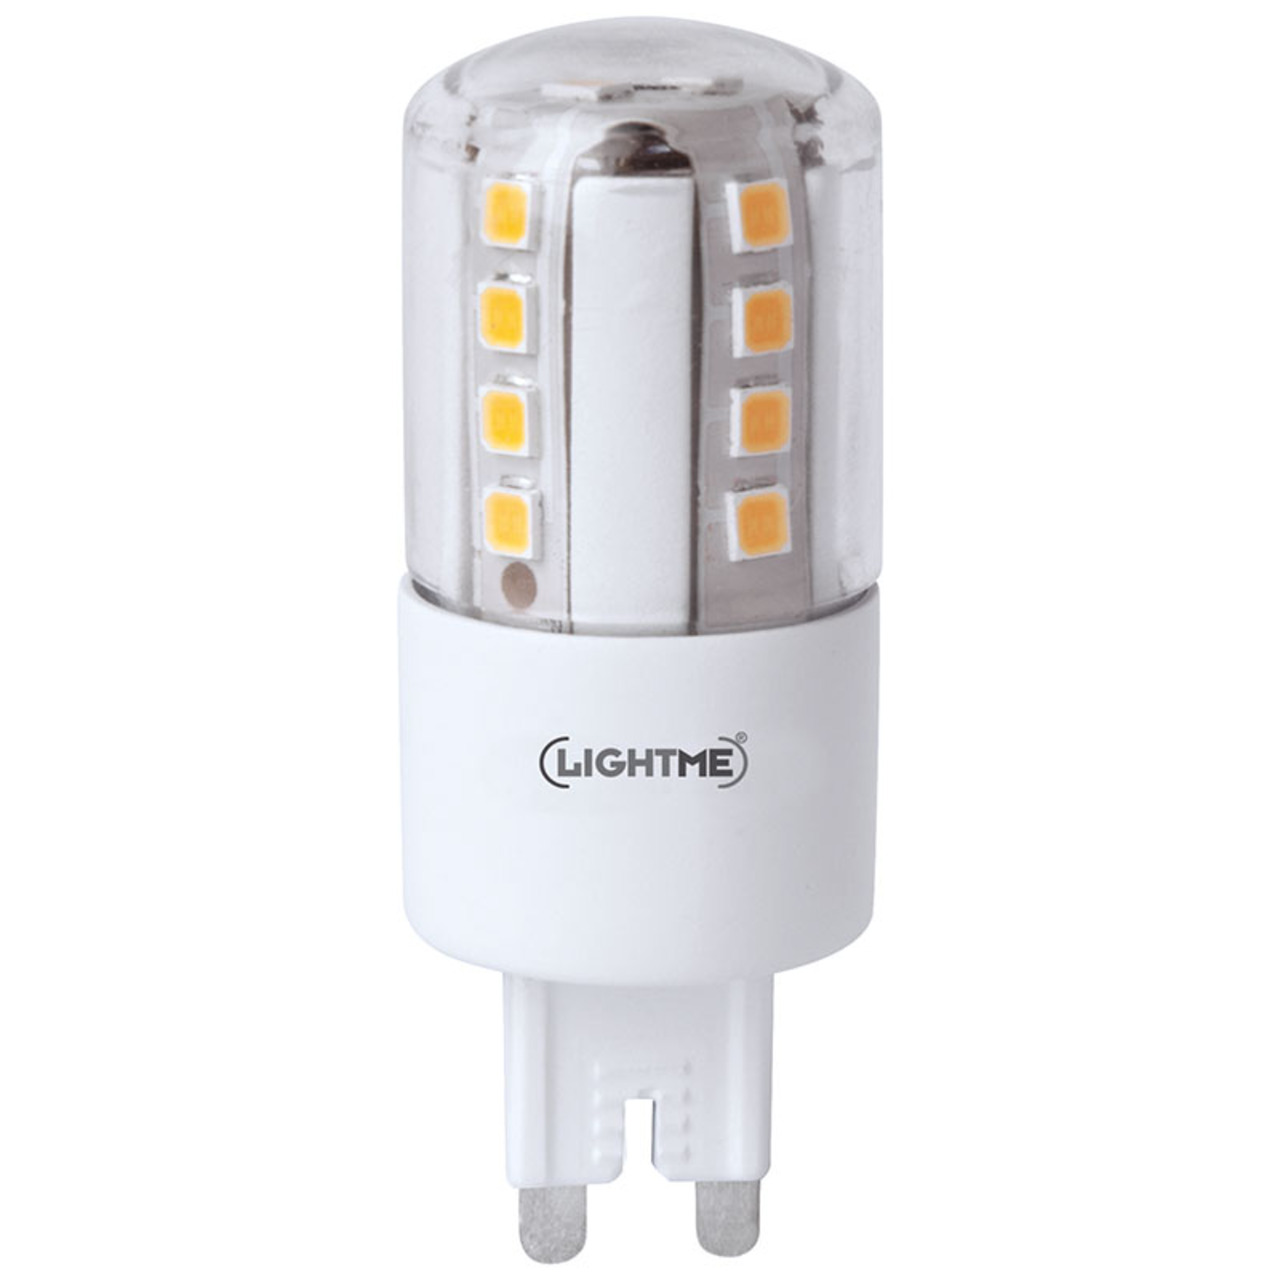 Lightme 4-5-W-G9-LED-Lampe- warmweiss- dimmbar- 510 lm unter Beleuchtung